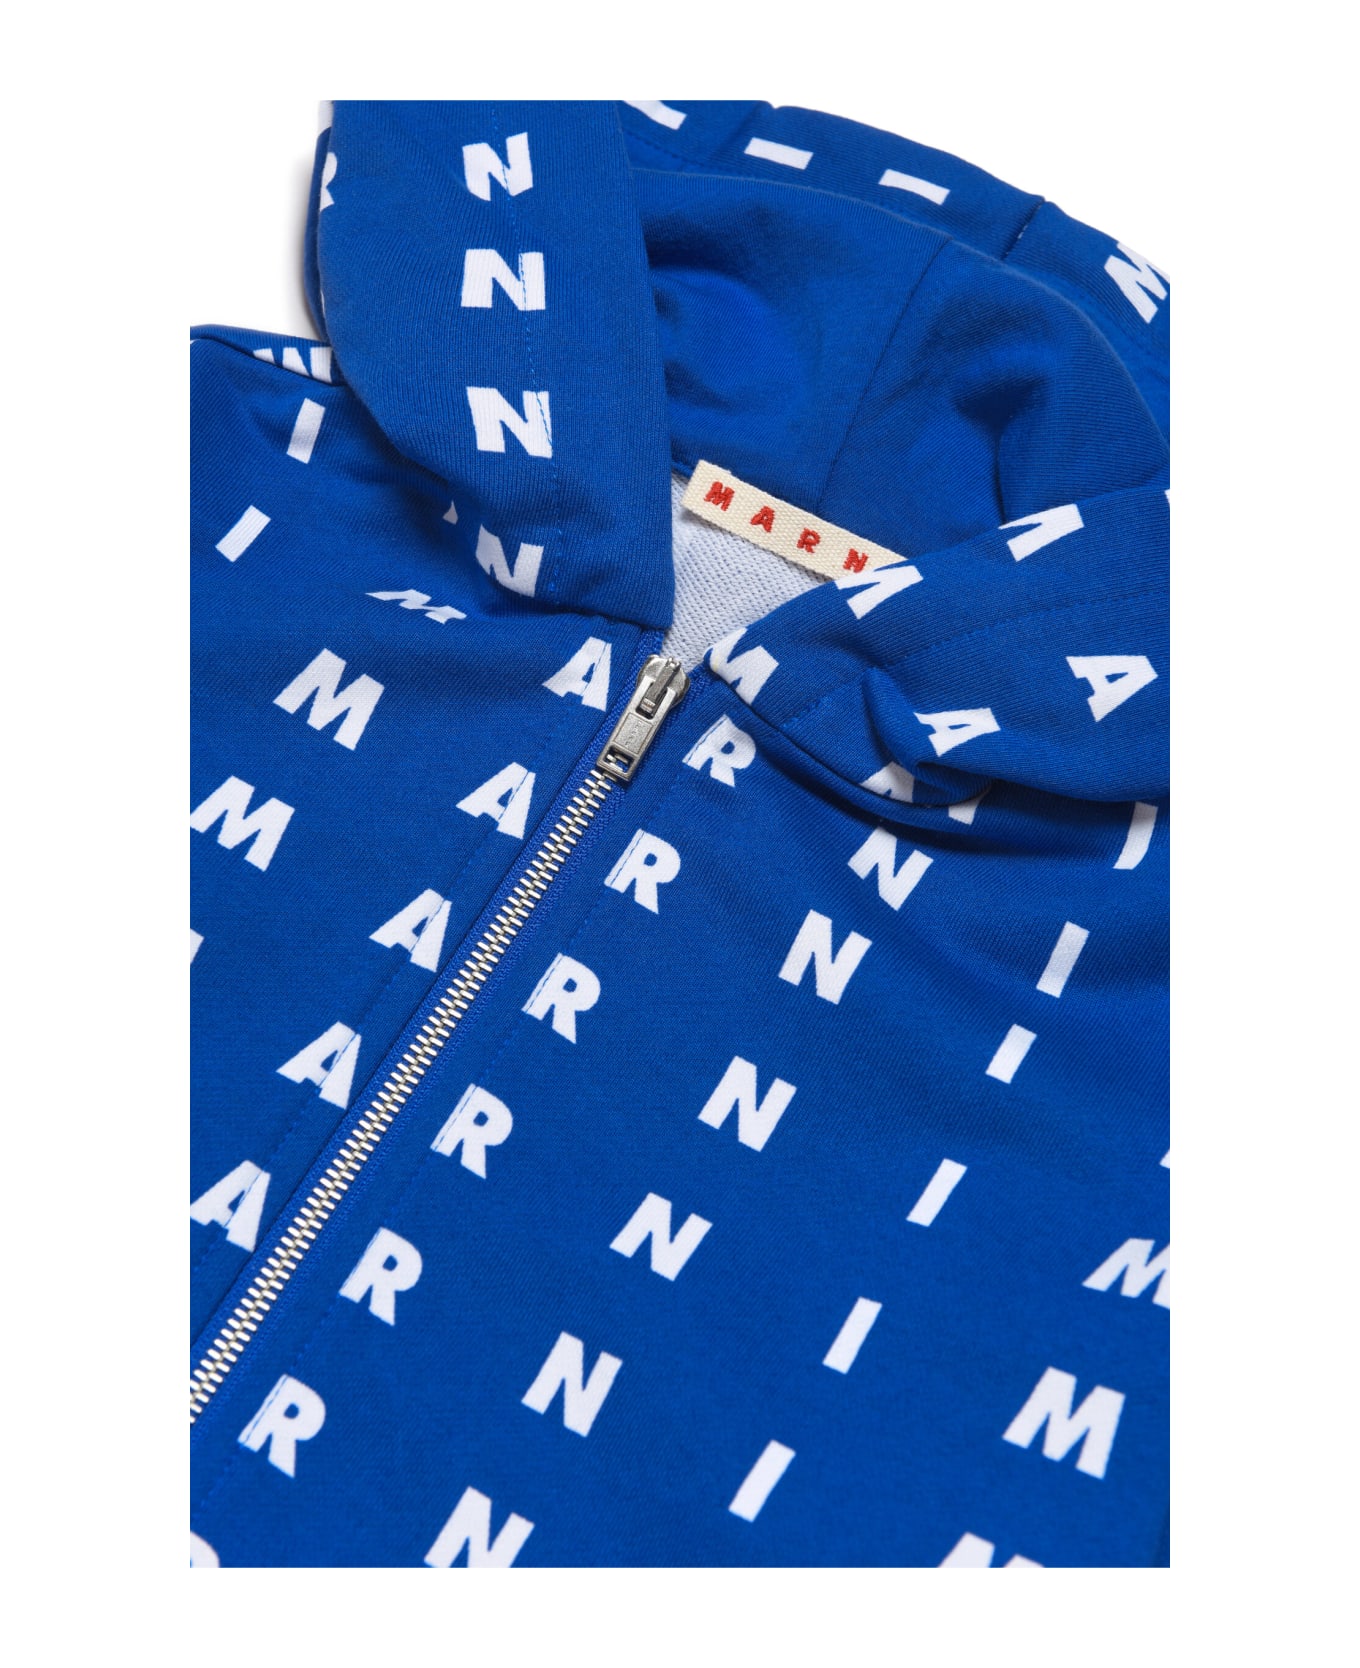 Marni Ms44u Sweat-shirt Marni Blue Cotton Hooded marni black leather jacket And Small Allover Logo - marni distressed knitted vest item